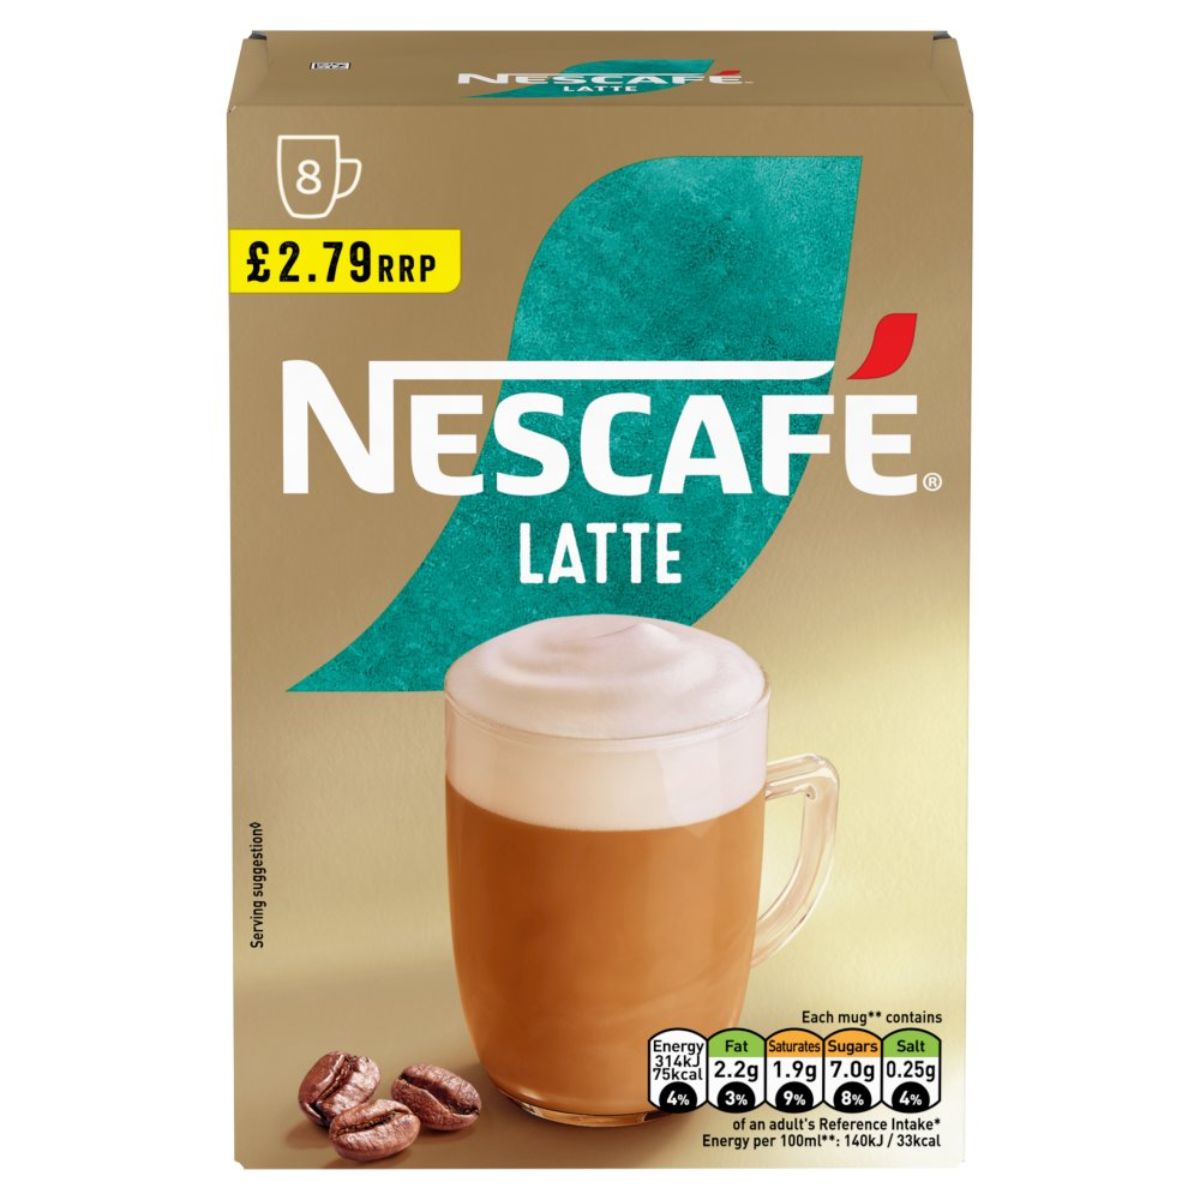 Nescafe - Latte - 144g in a box.